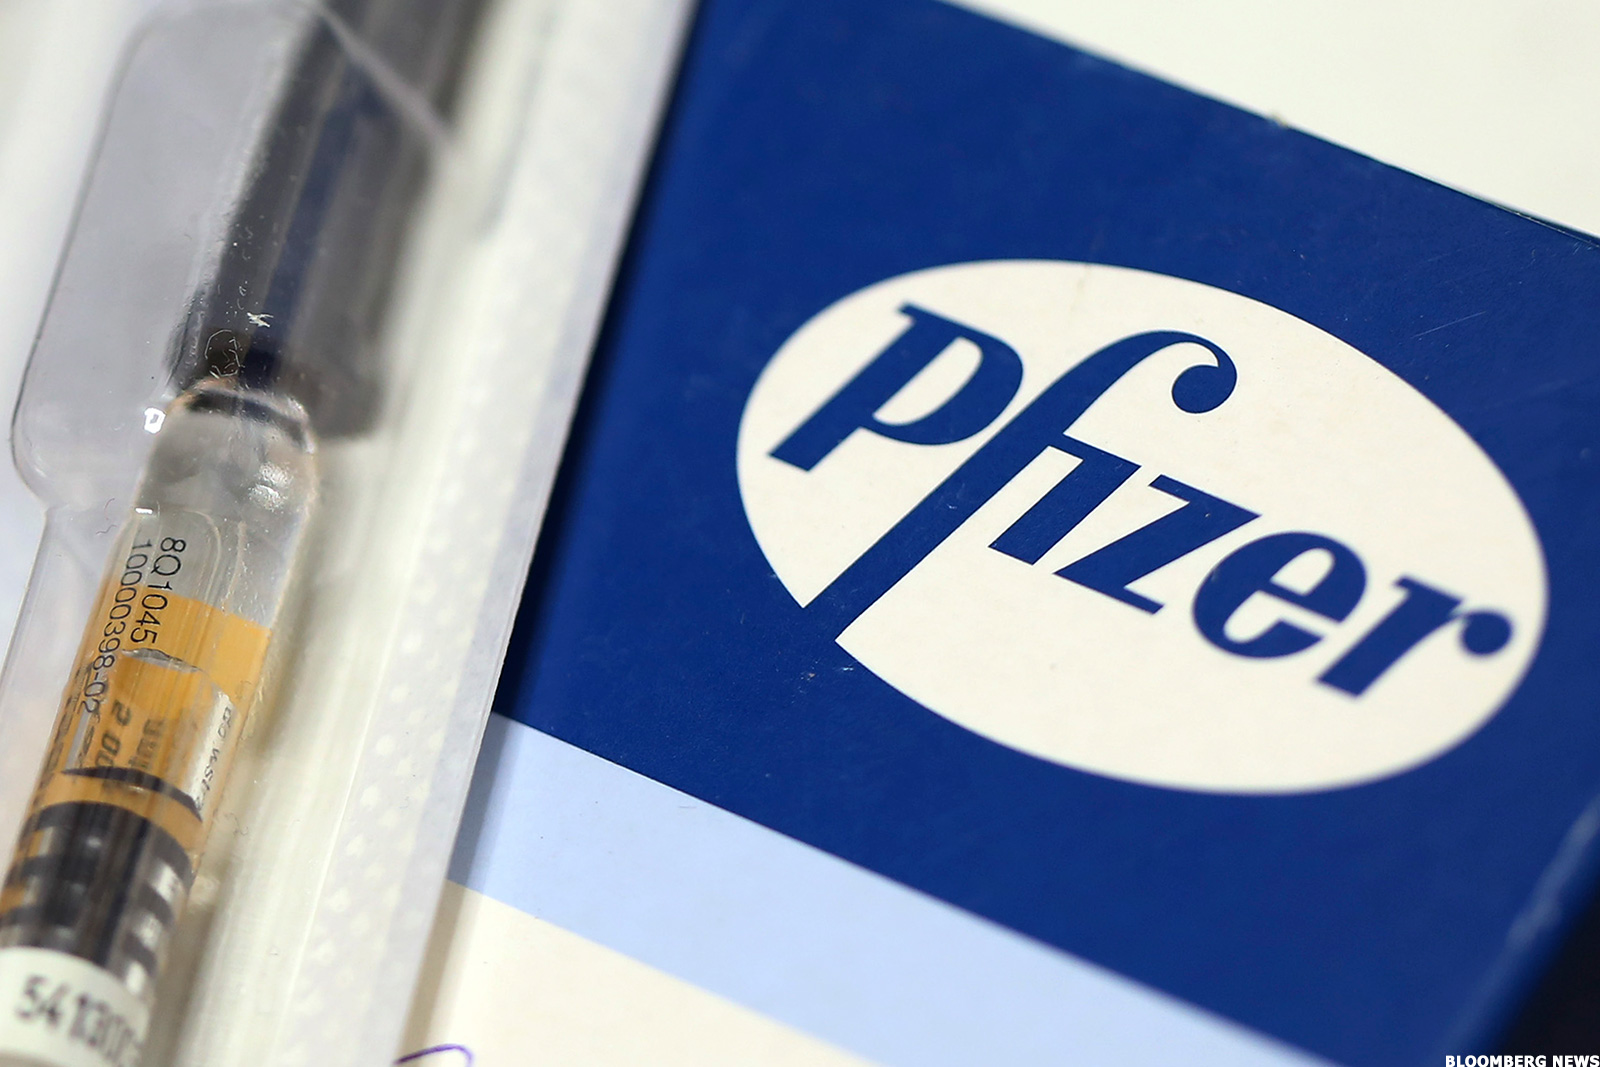 Pfizer (PFE) Stock Earnings Estimates Raised at Jefferies on $14 ...